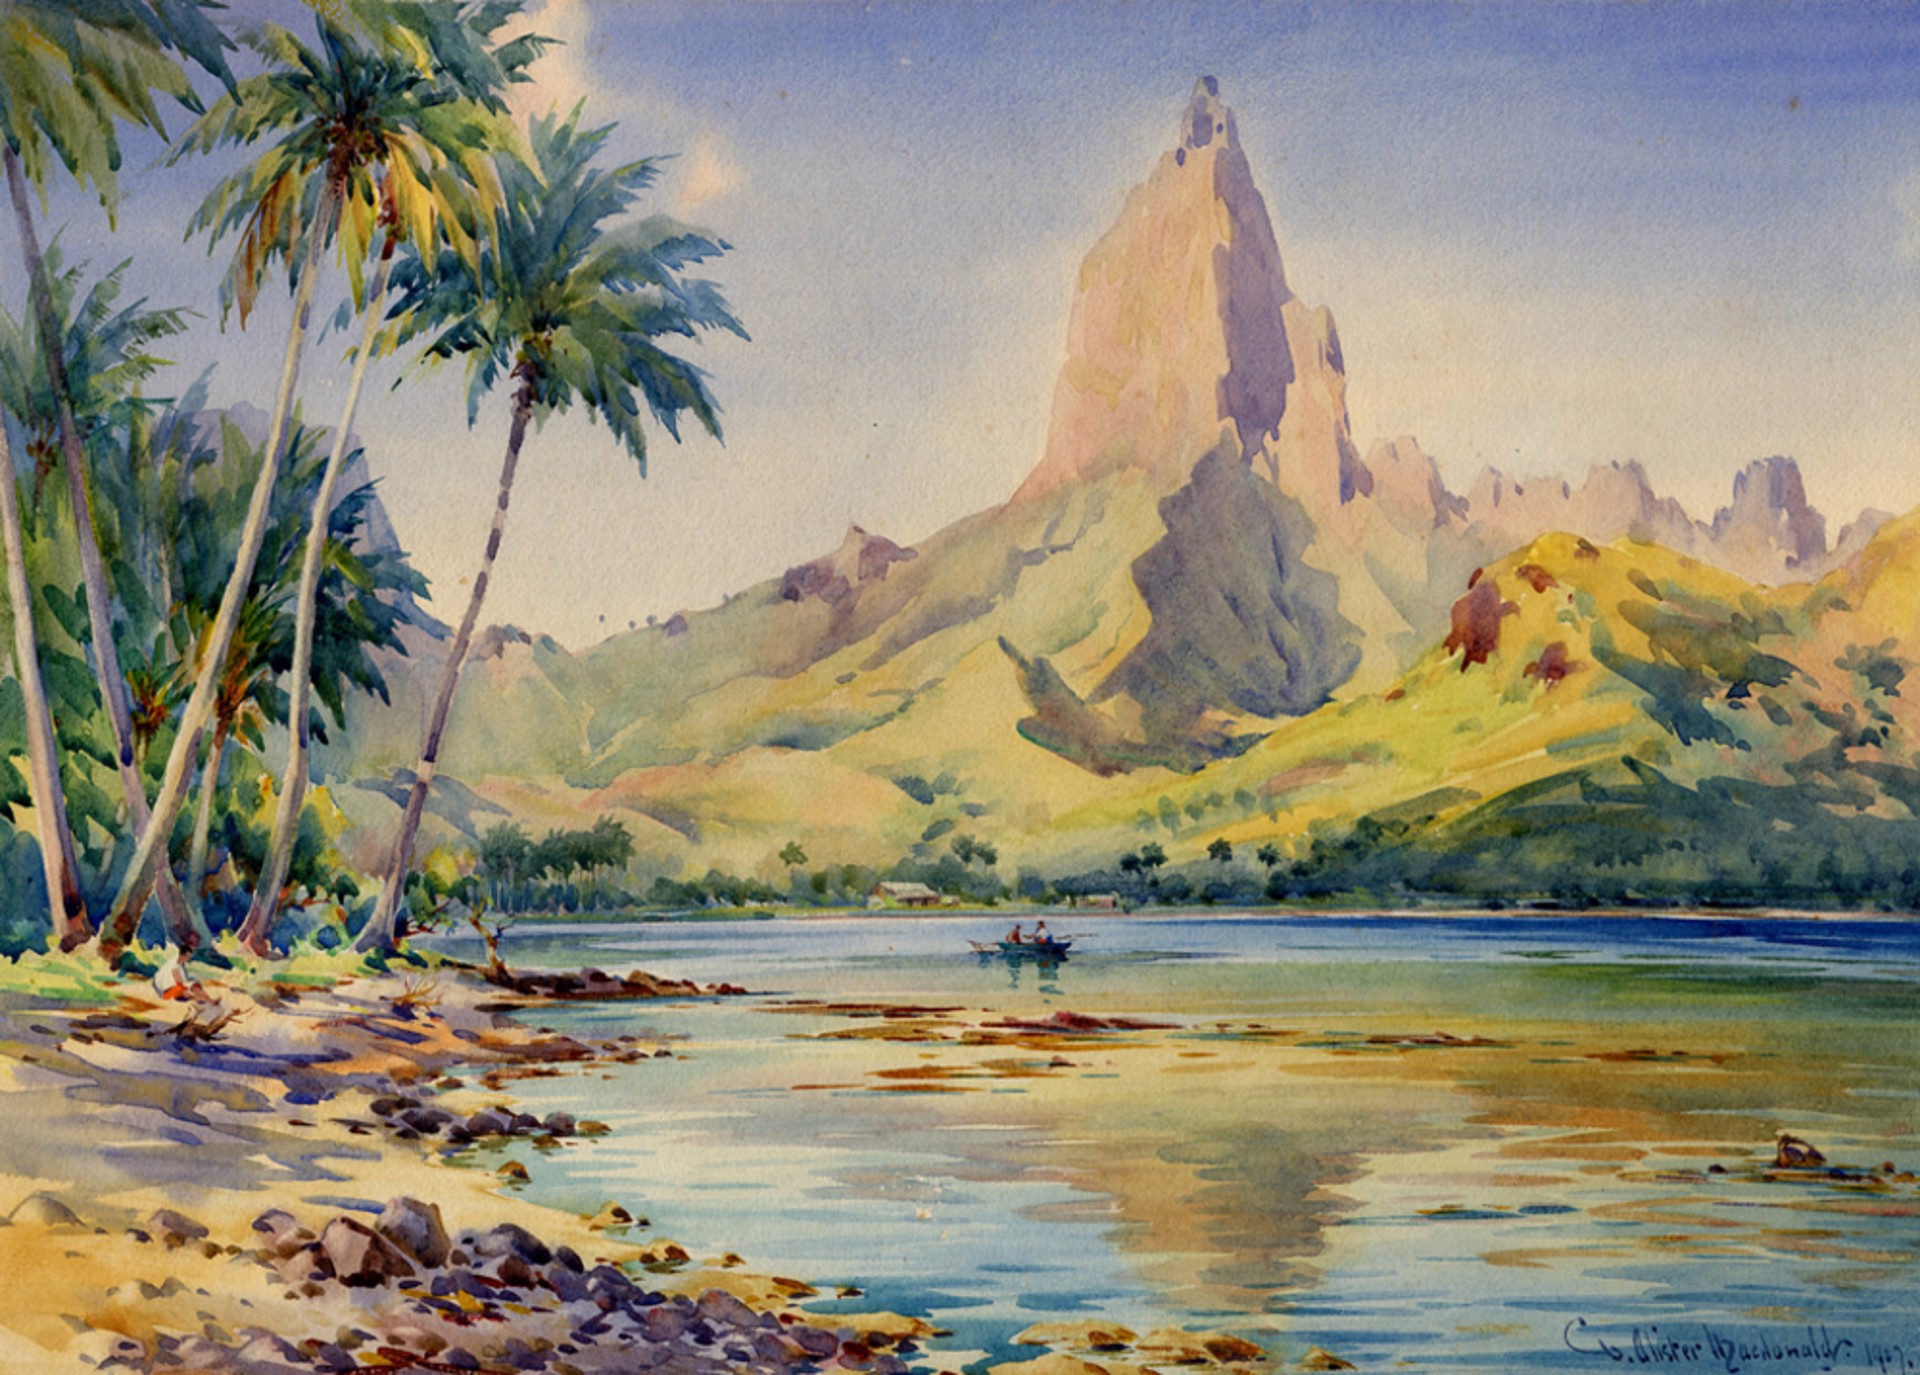 Oponohu Bay, Morning Light, Tahiti by William A. MacDonald